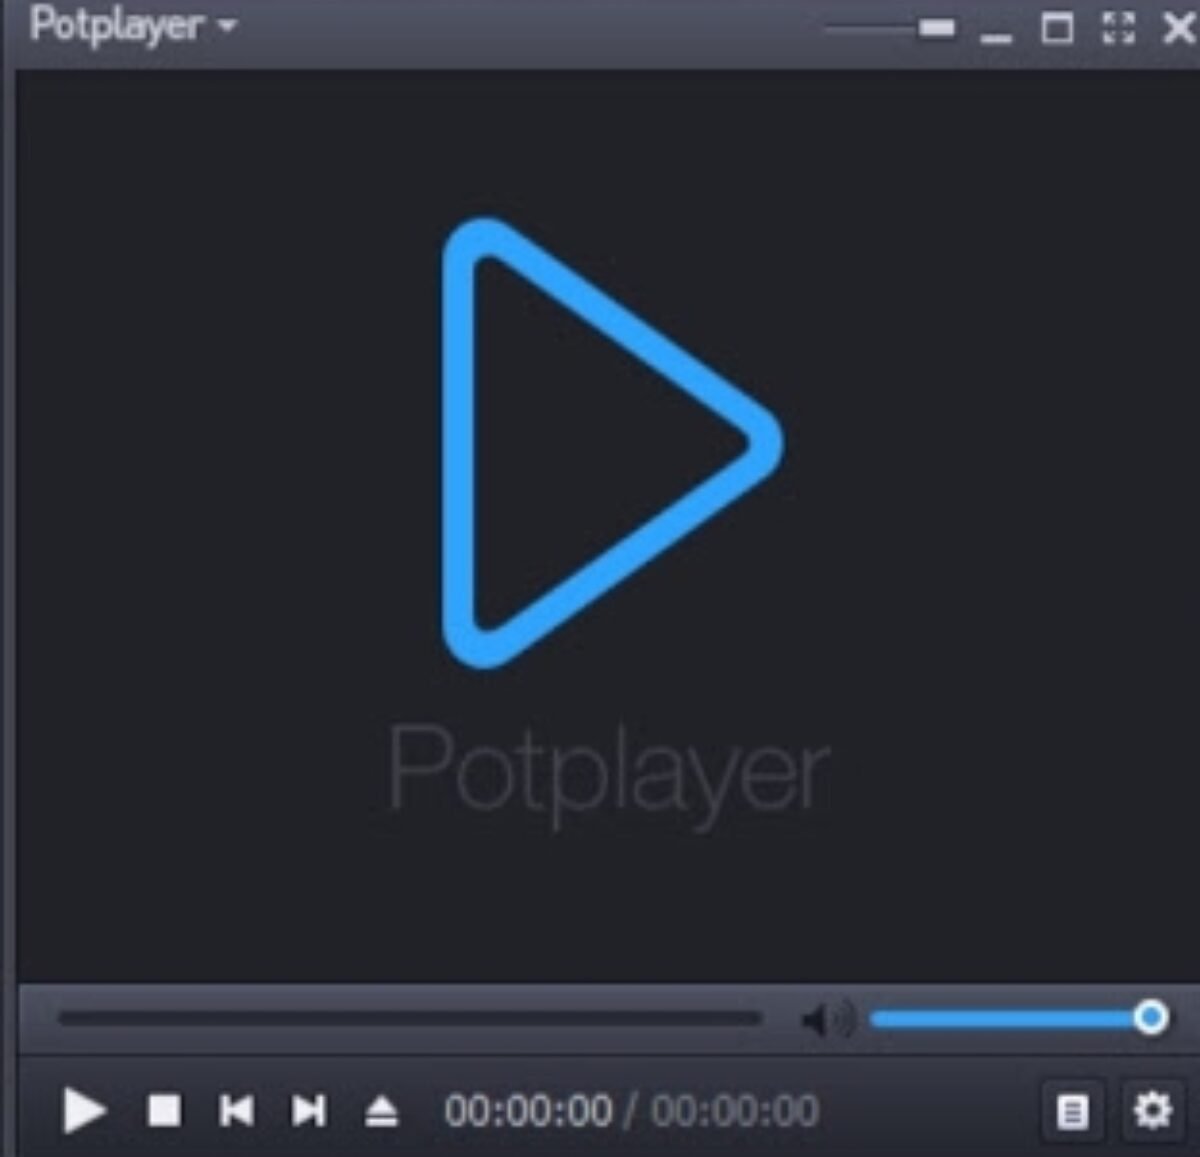 potplayer latest version free download for windows 7